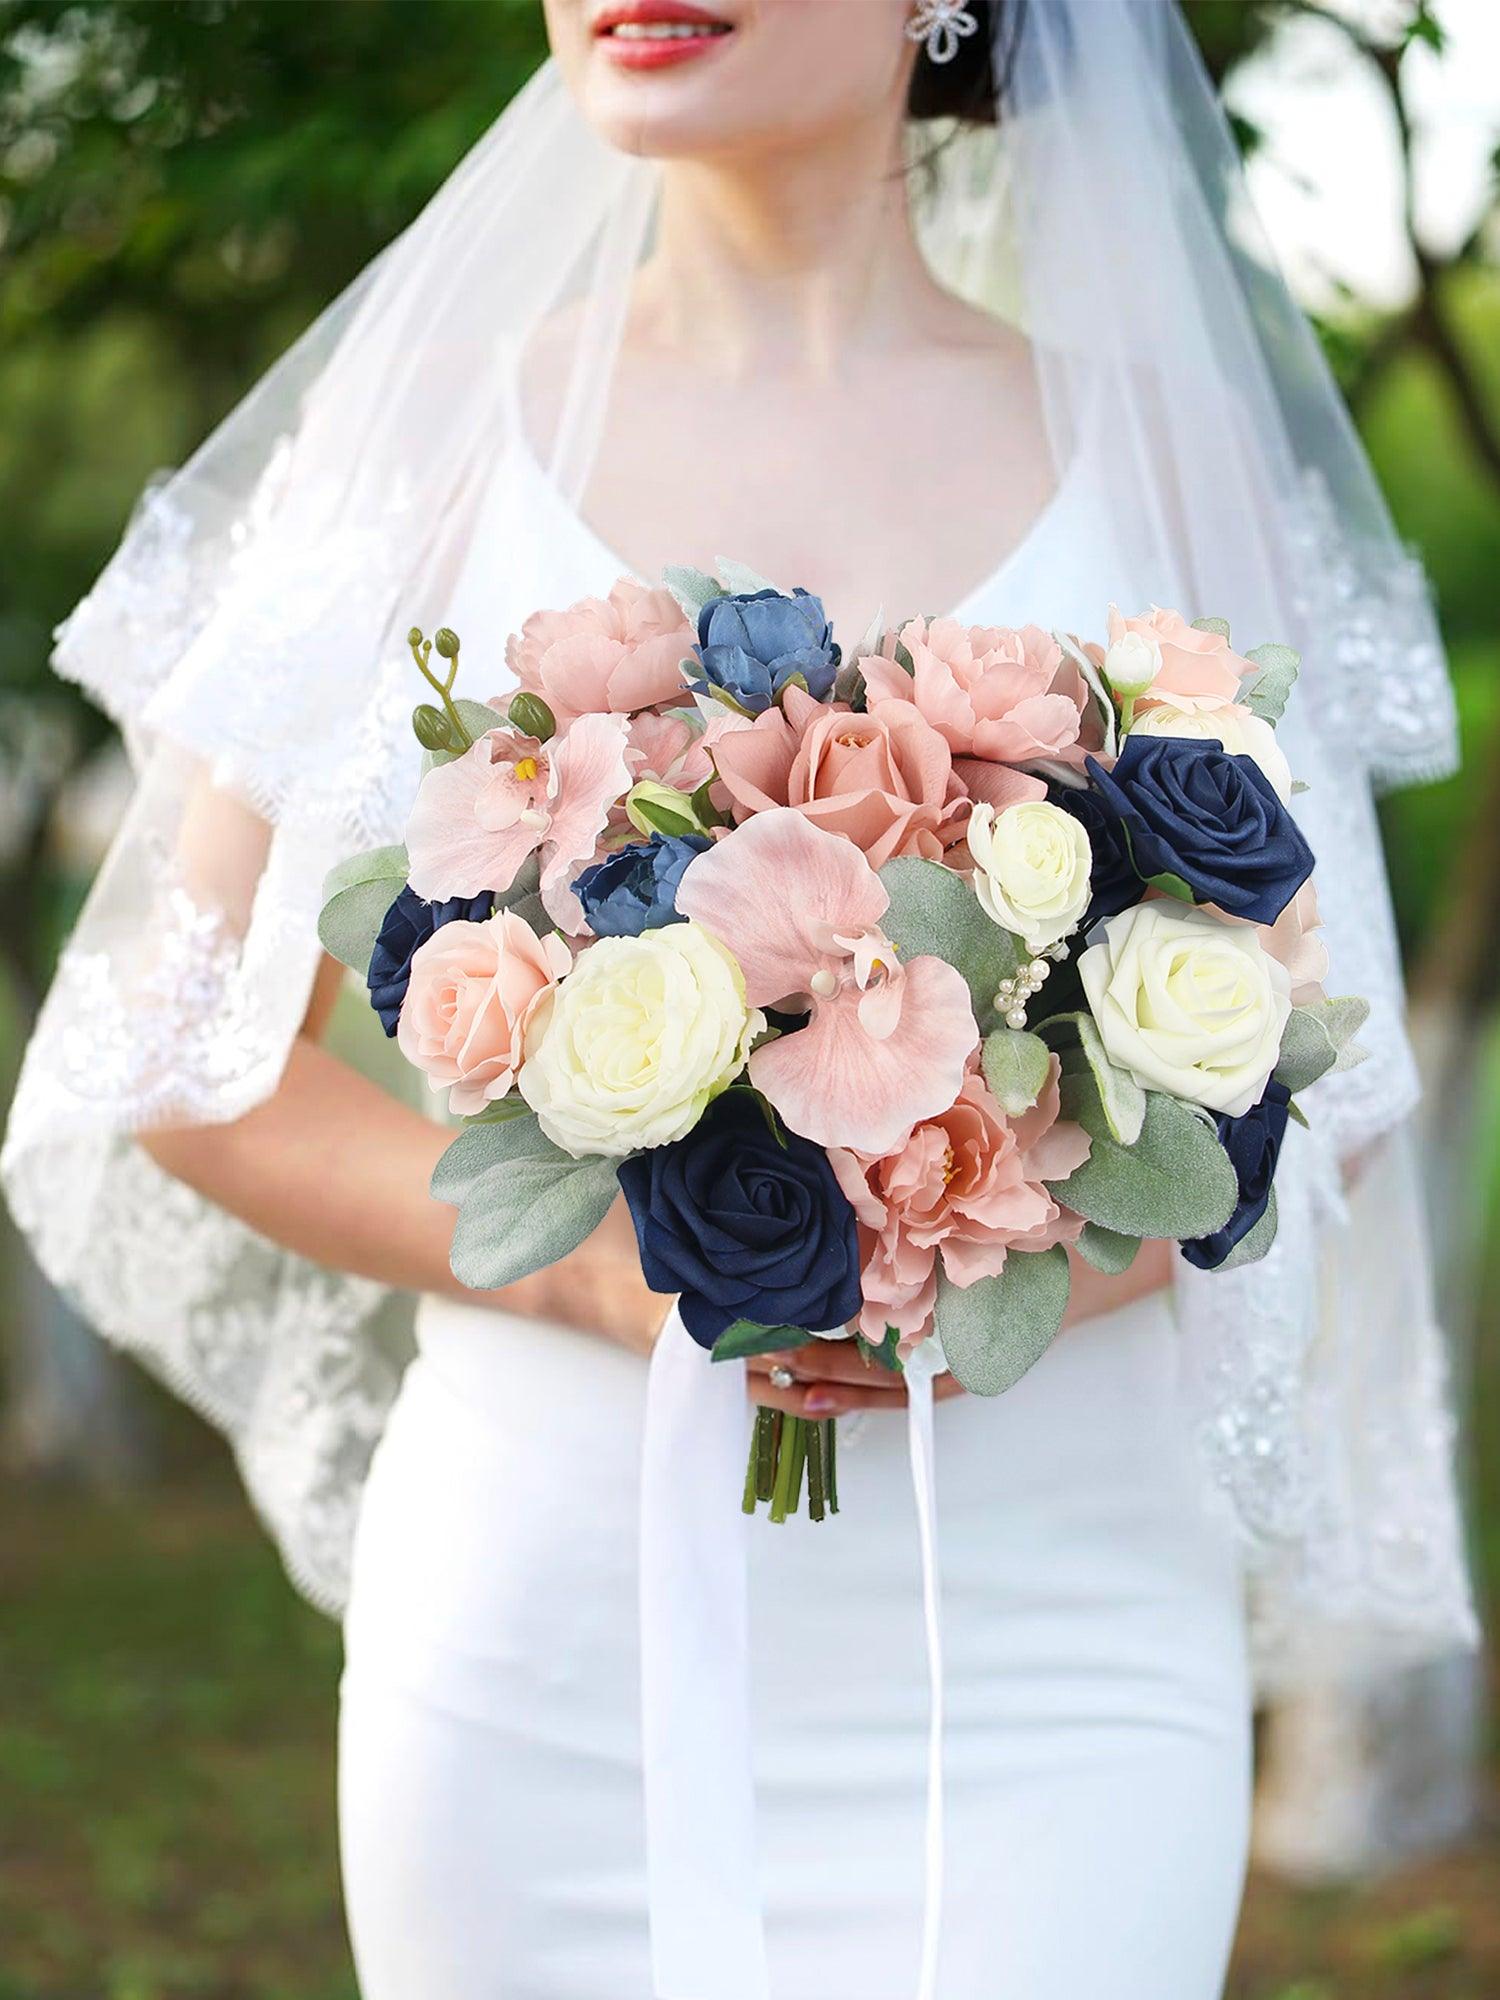 12.2 inch wide Dusty Rose & Navy Blue Bridal Bouquet